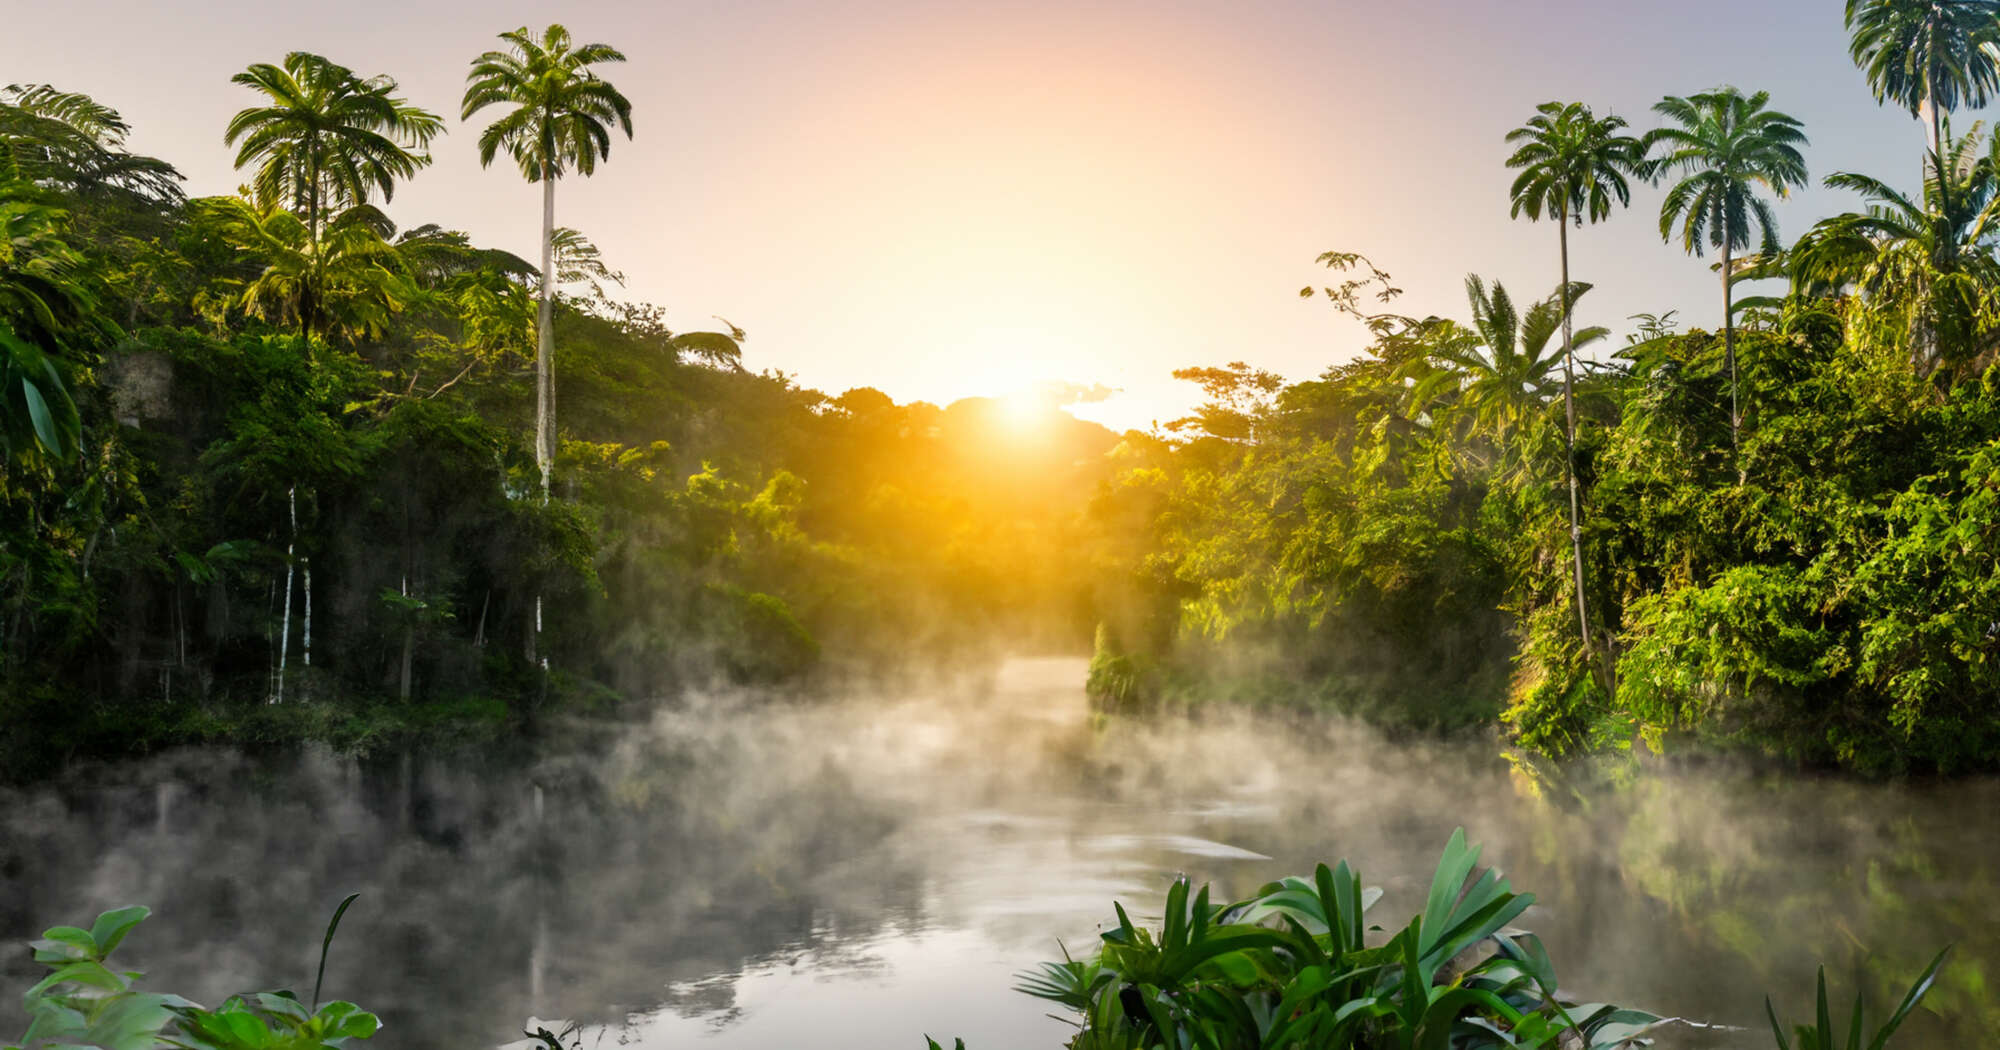 Amazon Rainforest with Mist